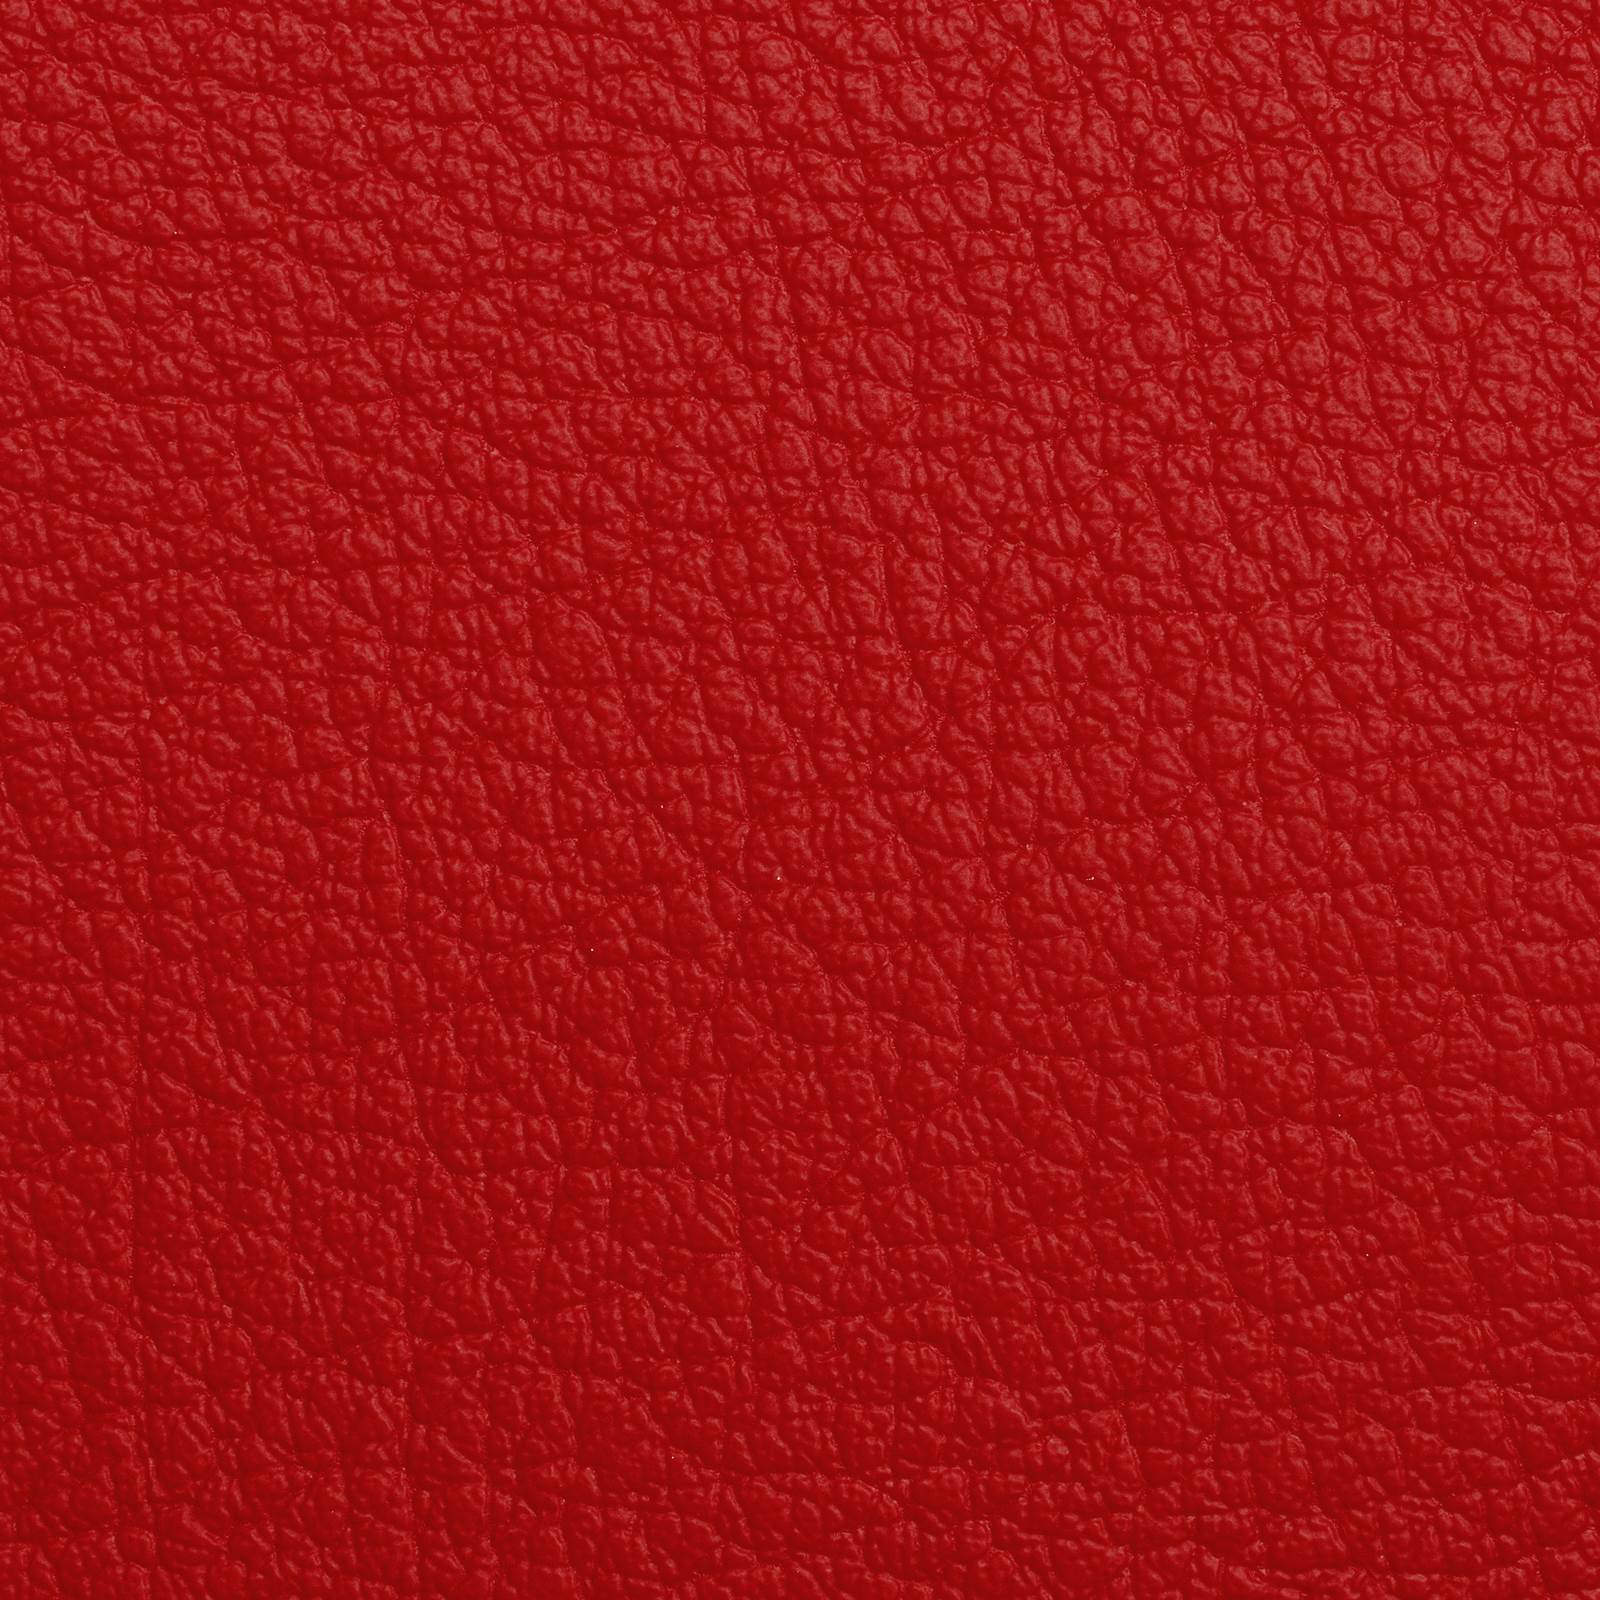 Skytex imitation leather flame retardant B1 (high red)